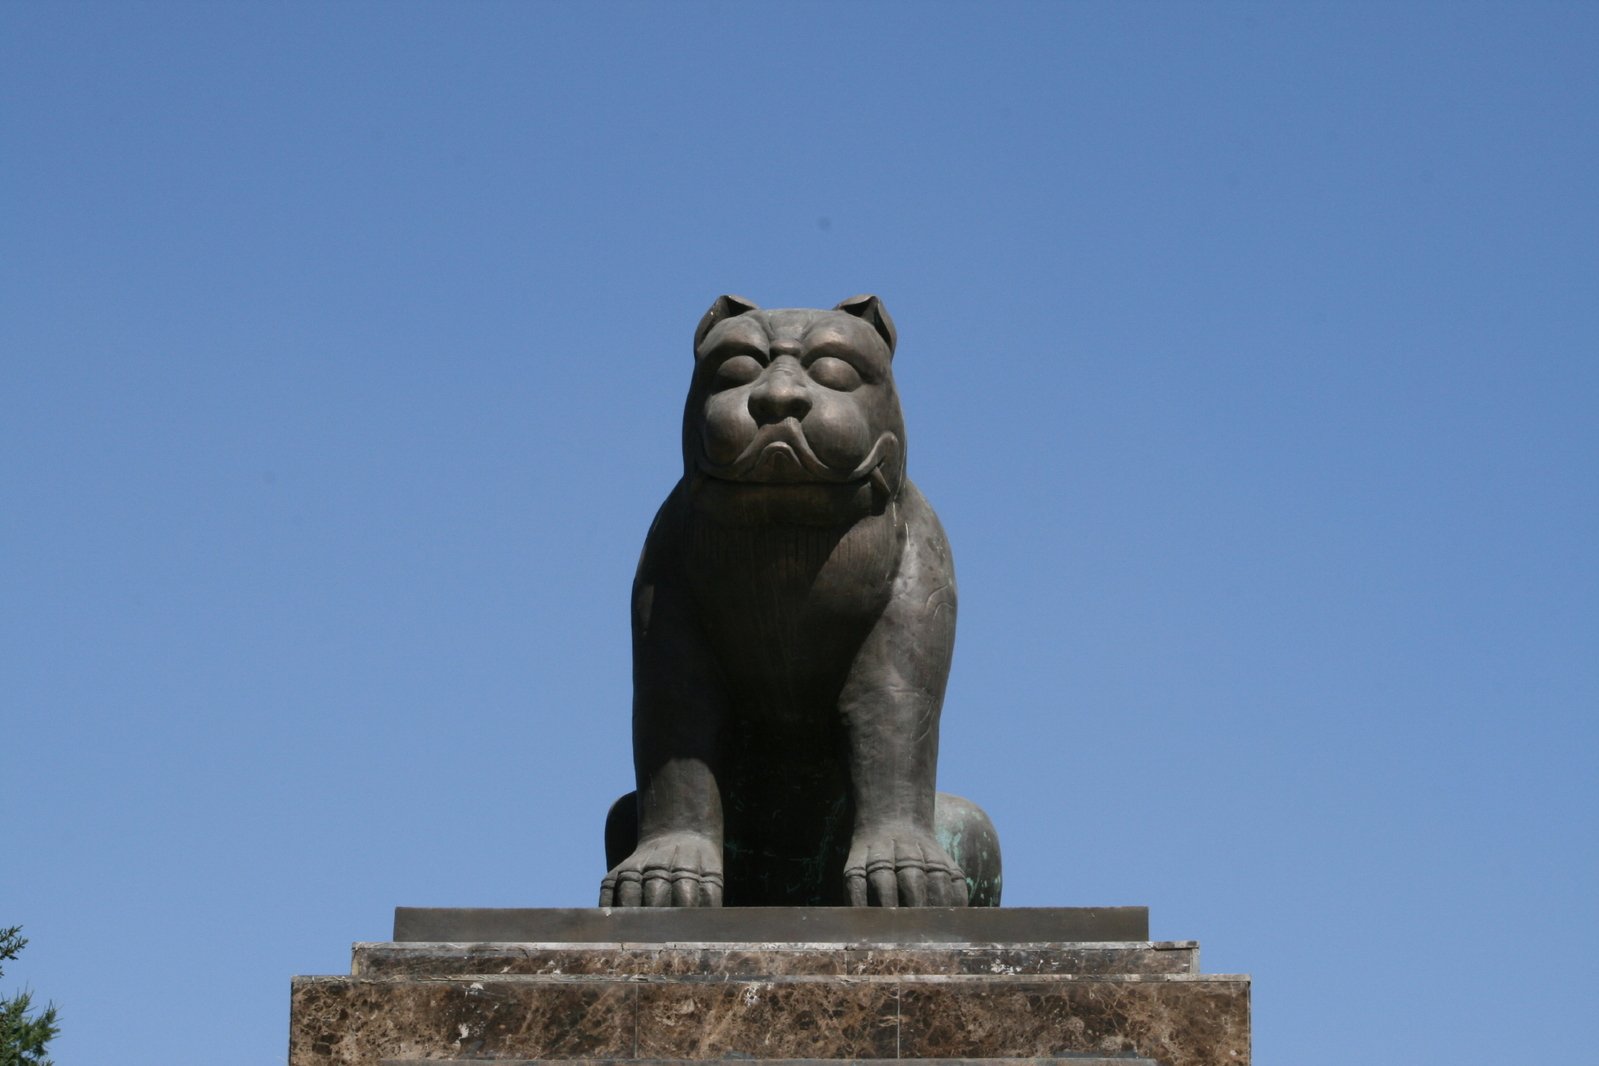 a statue of a lion sitting on a pedestal